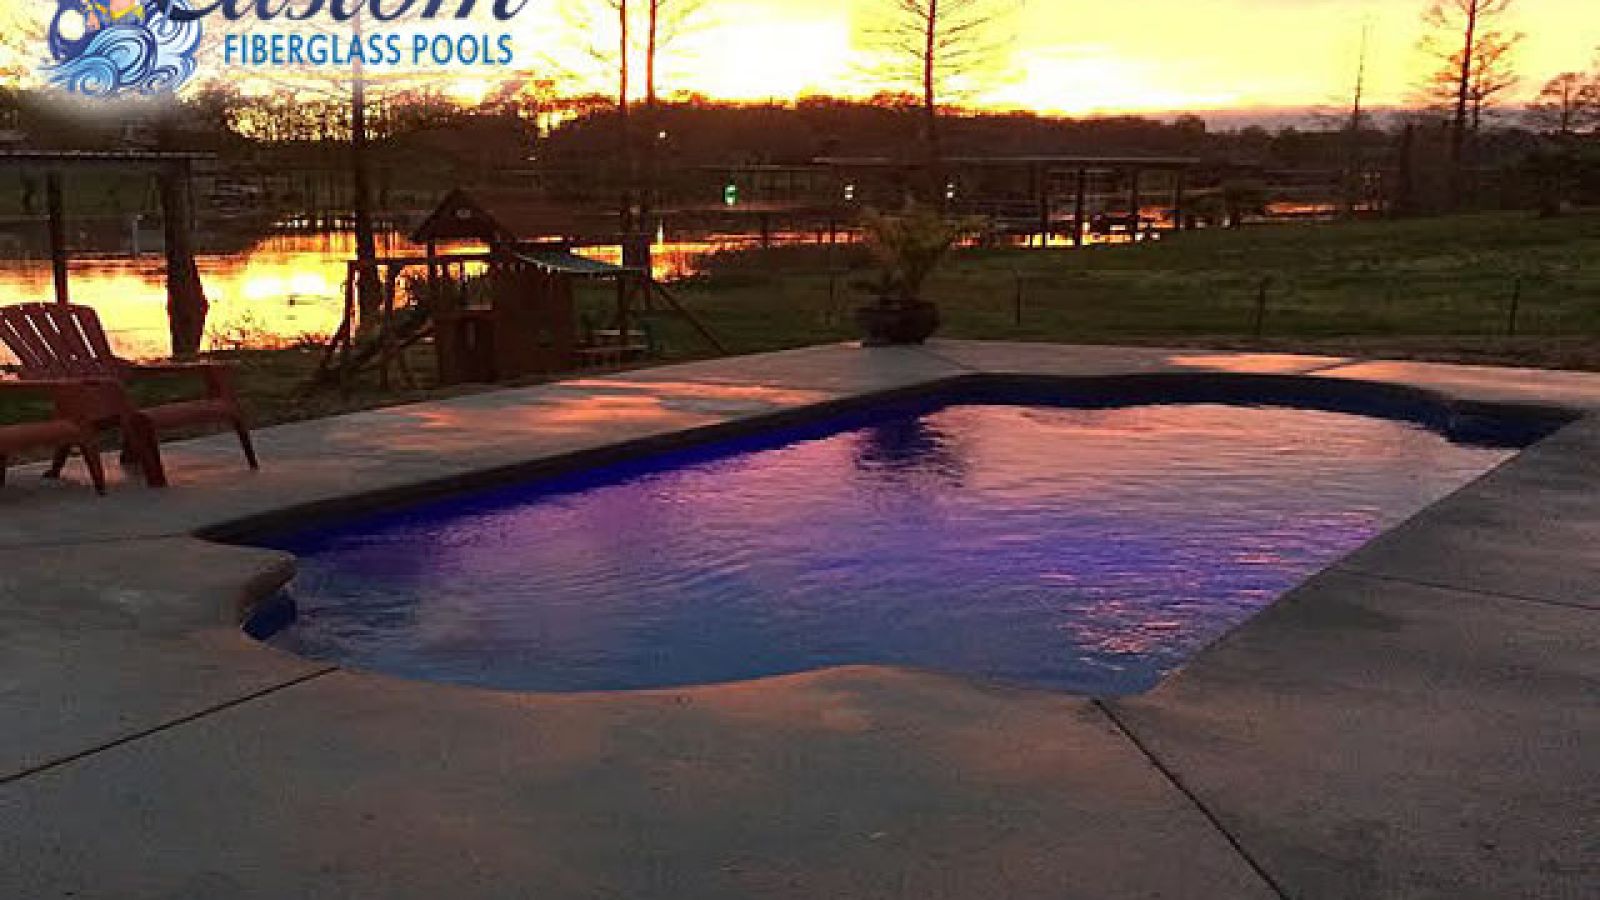 Seminole Roman Fiberglass Pool offering a touch of ancient Rome in a Clarksville, TN backyard